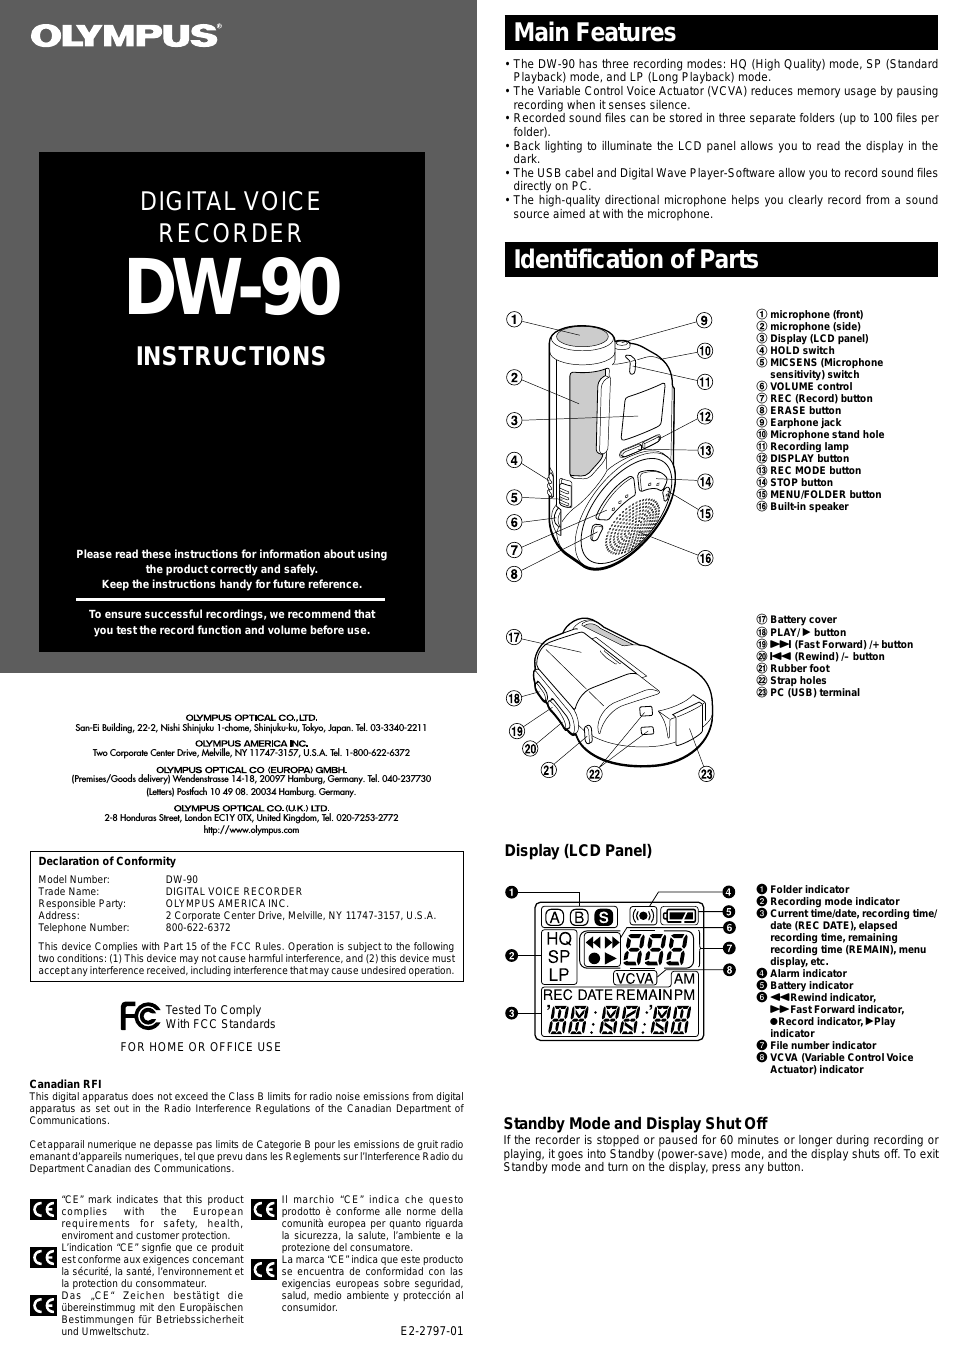 DW-90 Digital Voice Recorder